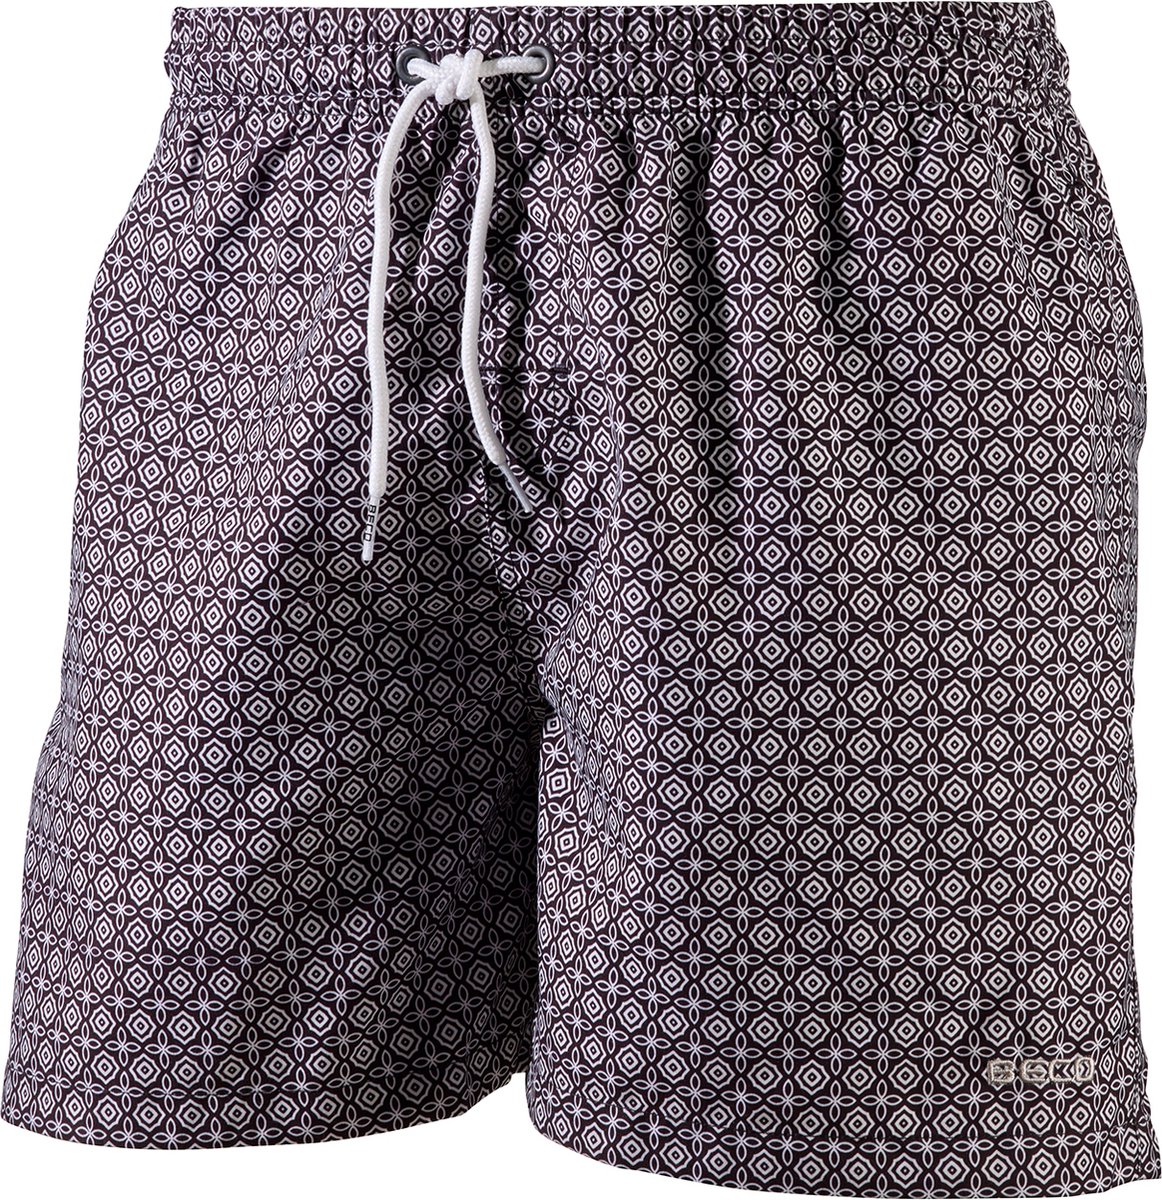 BECO shorts, binnenbroekje, elastische band, lengte 42 cm, 3 zakjes, zwart, maat XL